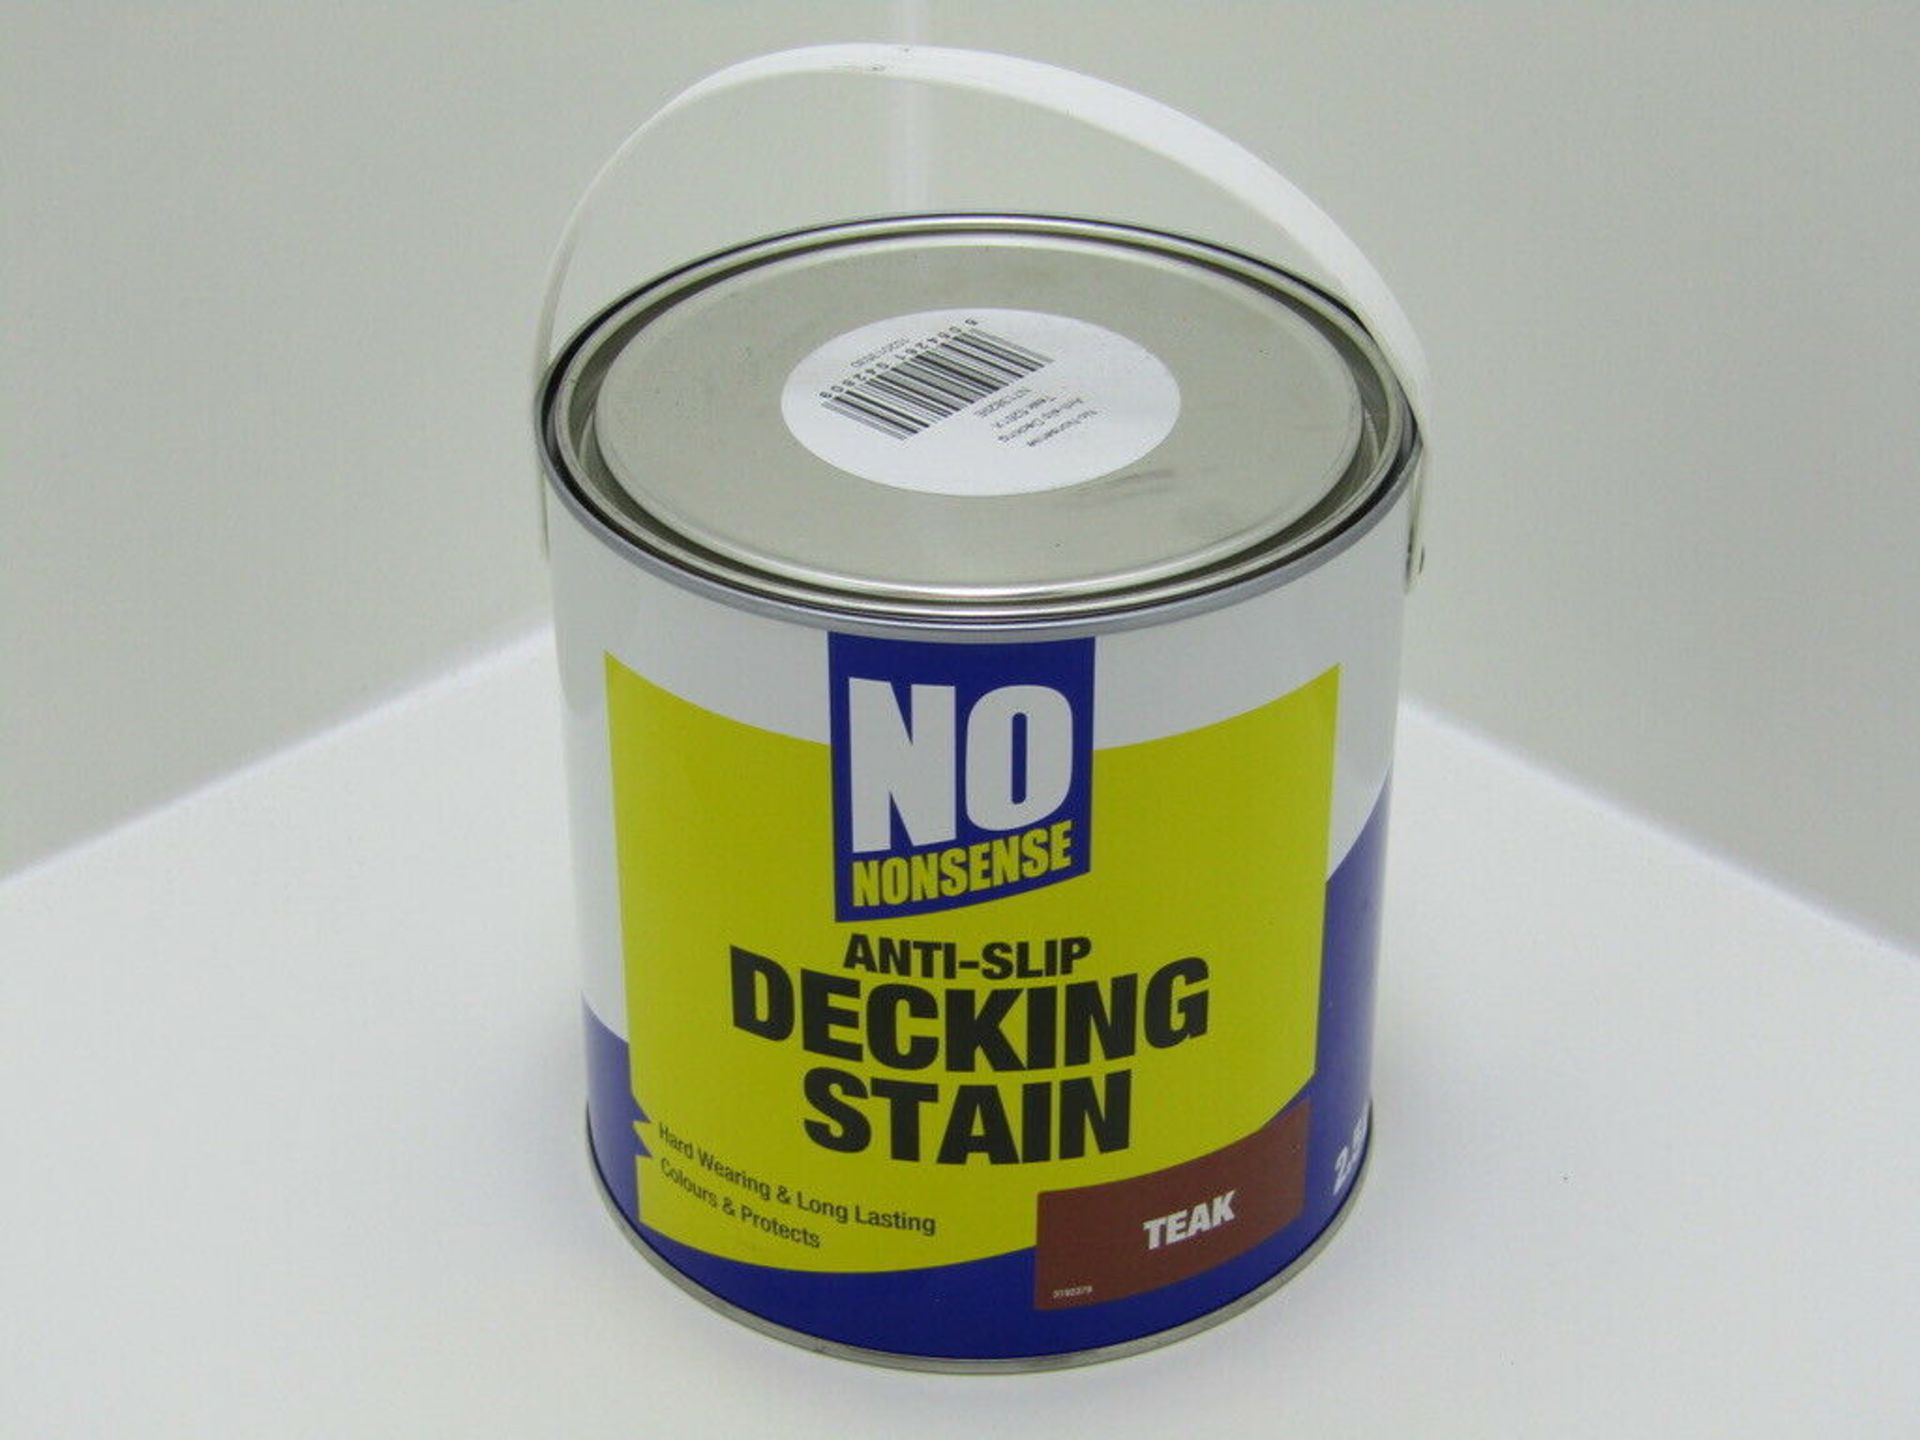 5 x Anti Slip Decking Paint. Teak. 2.5 litre each